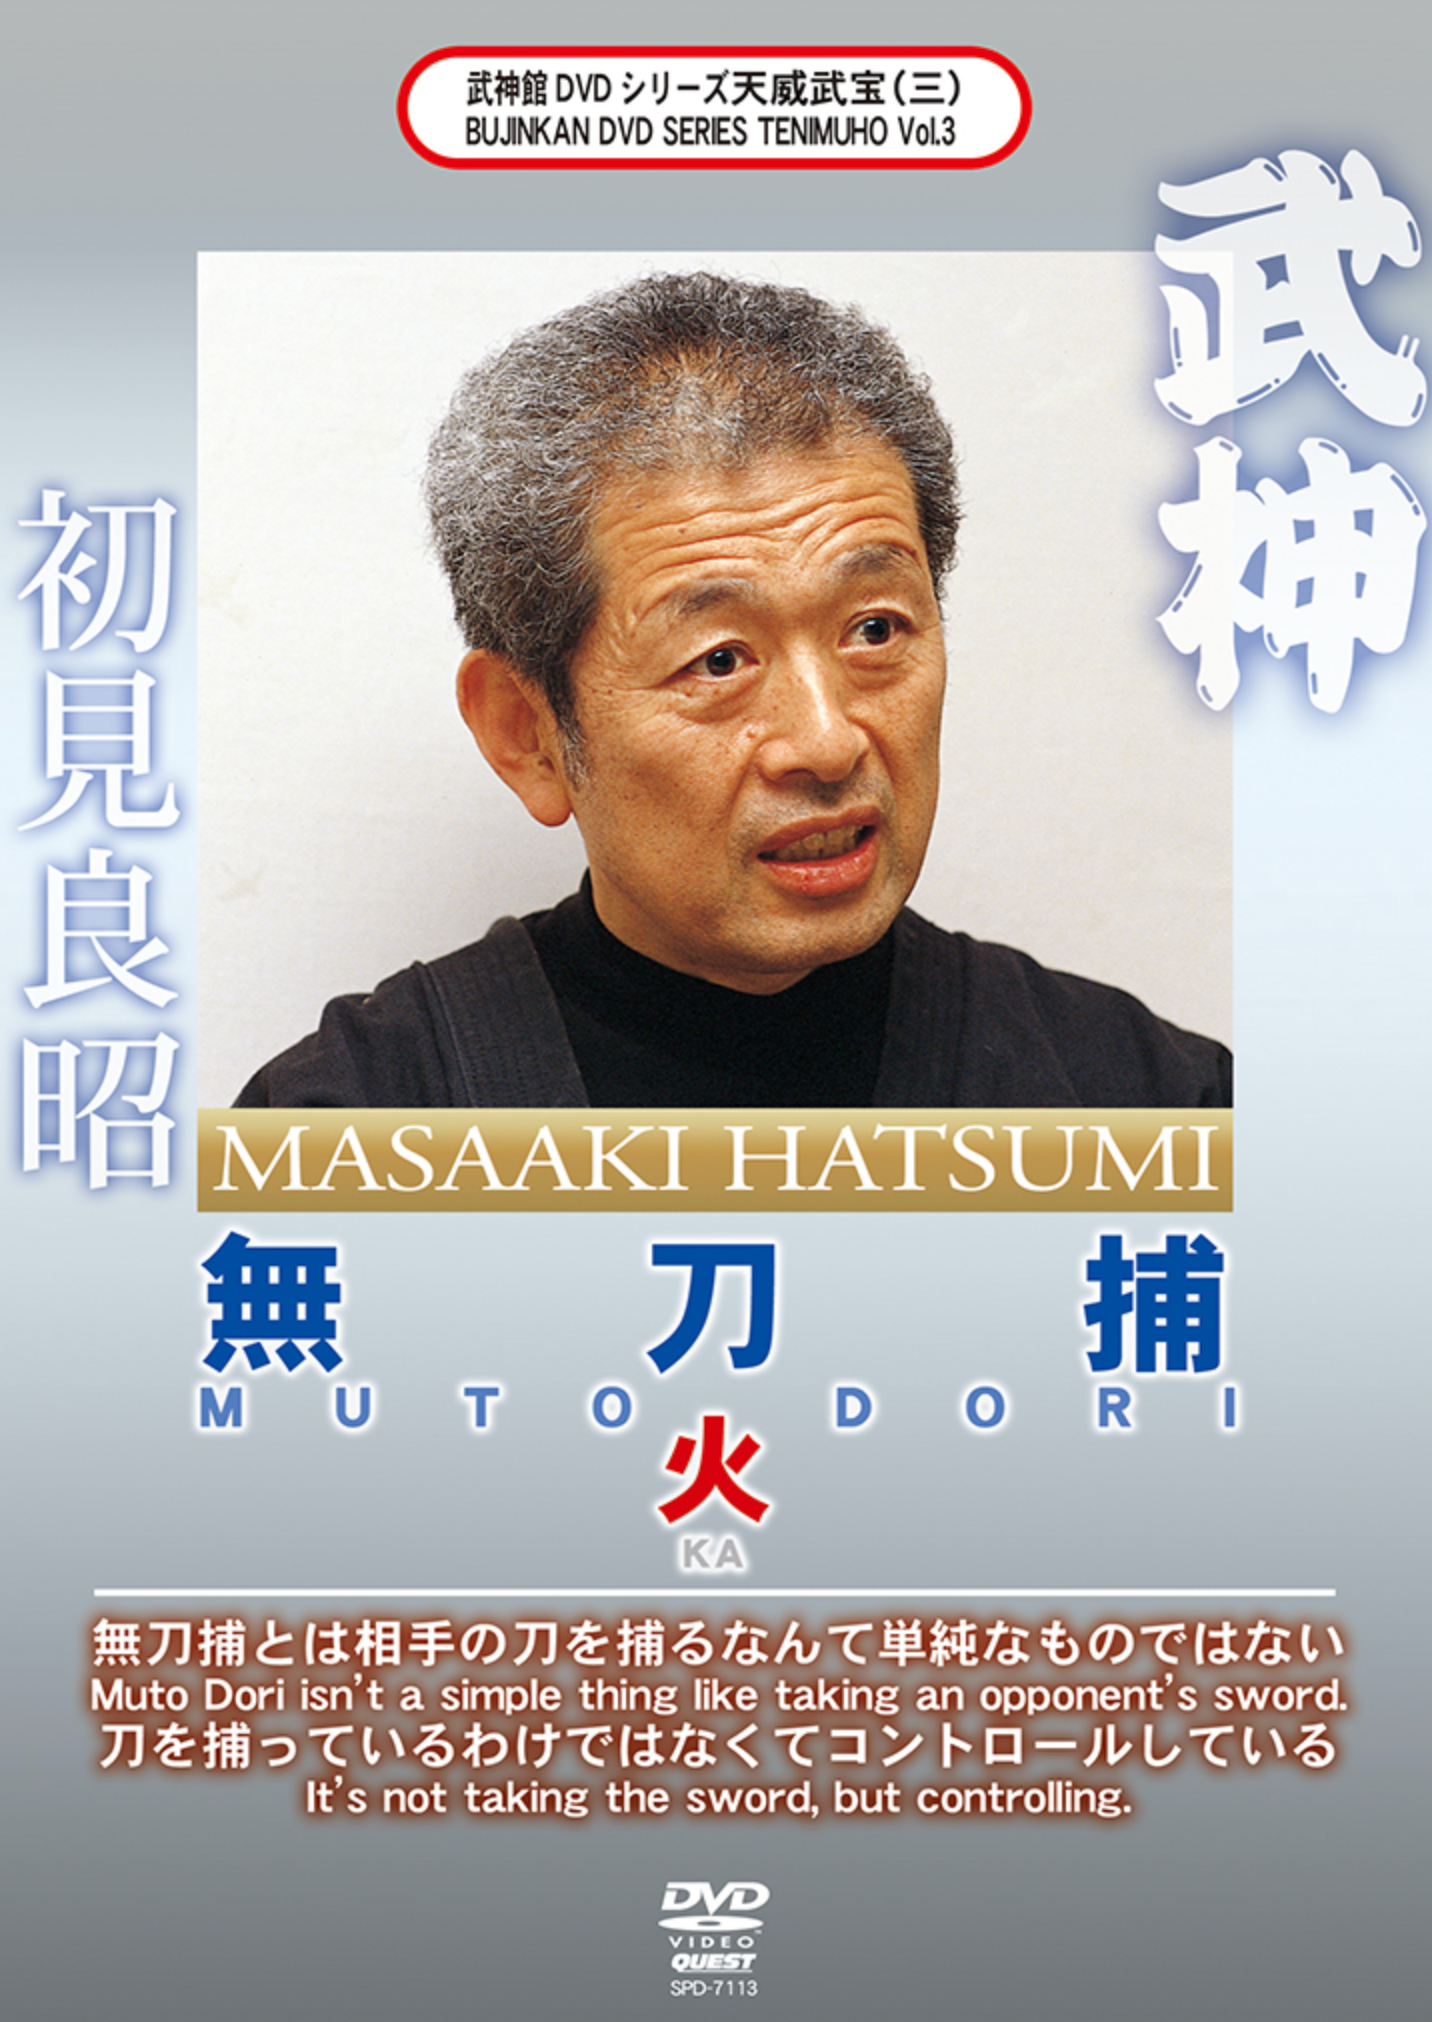 Bujinkan Mutodori Ka DVD with Masaaki Hatsumi - Budovideos Inc